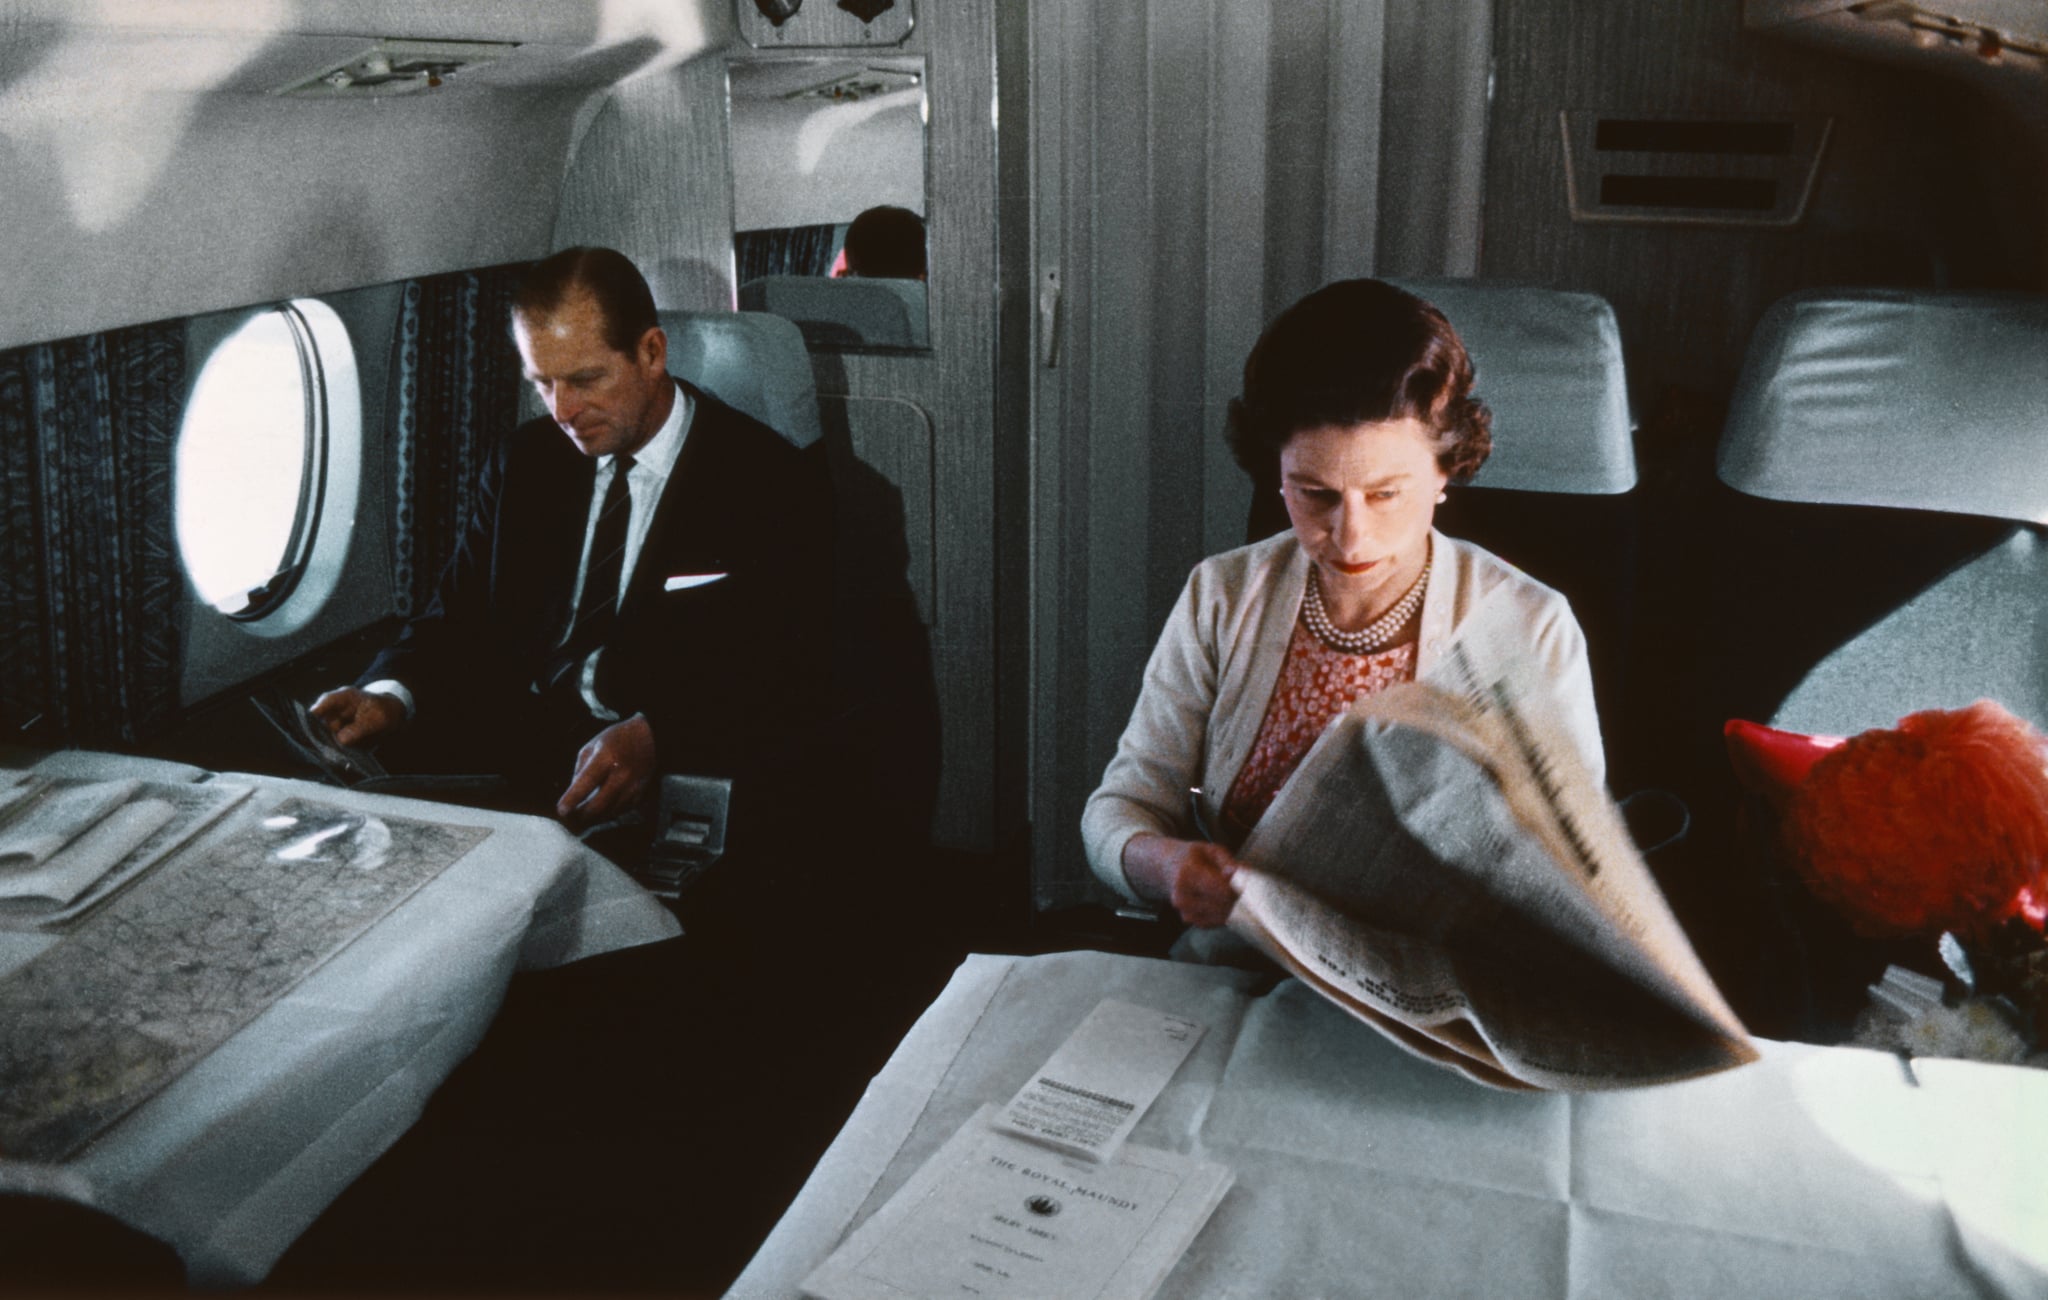 Queen Elizabeth II reading papers on a plane in 1969